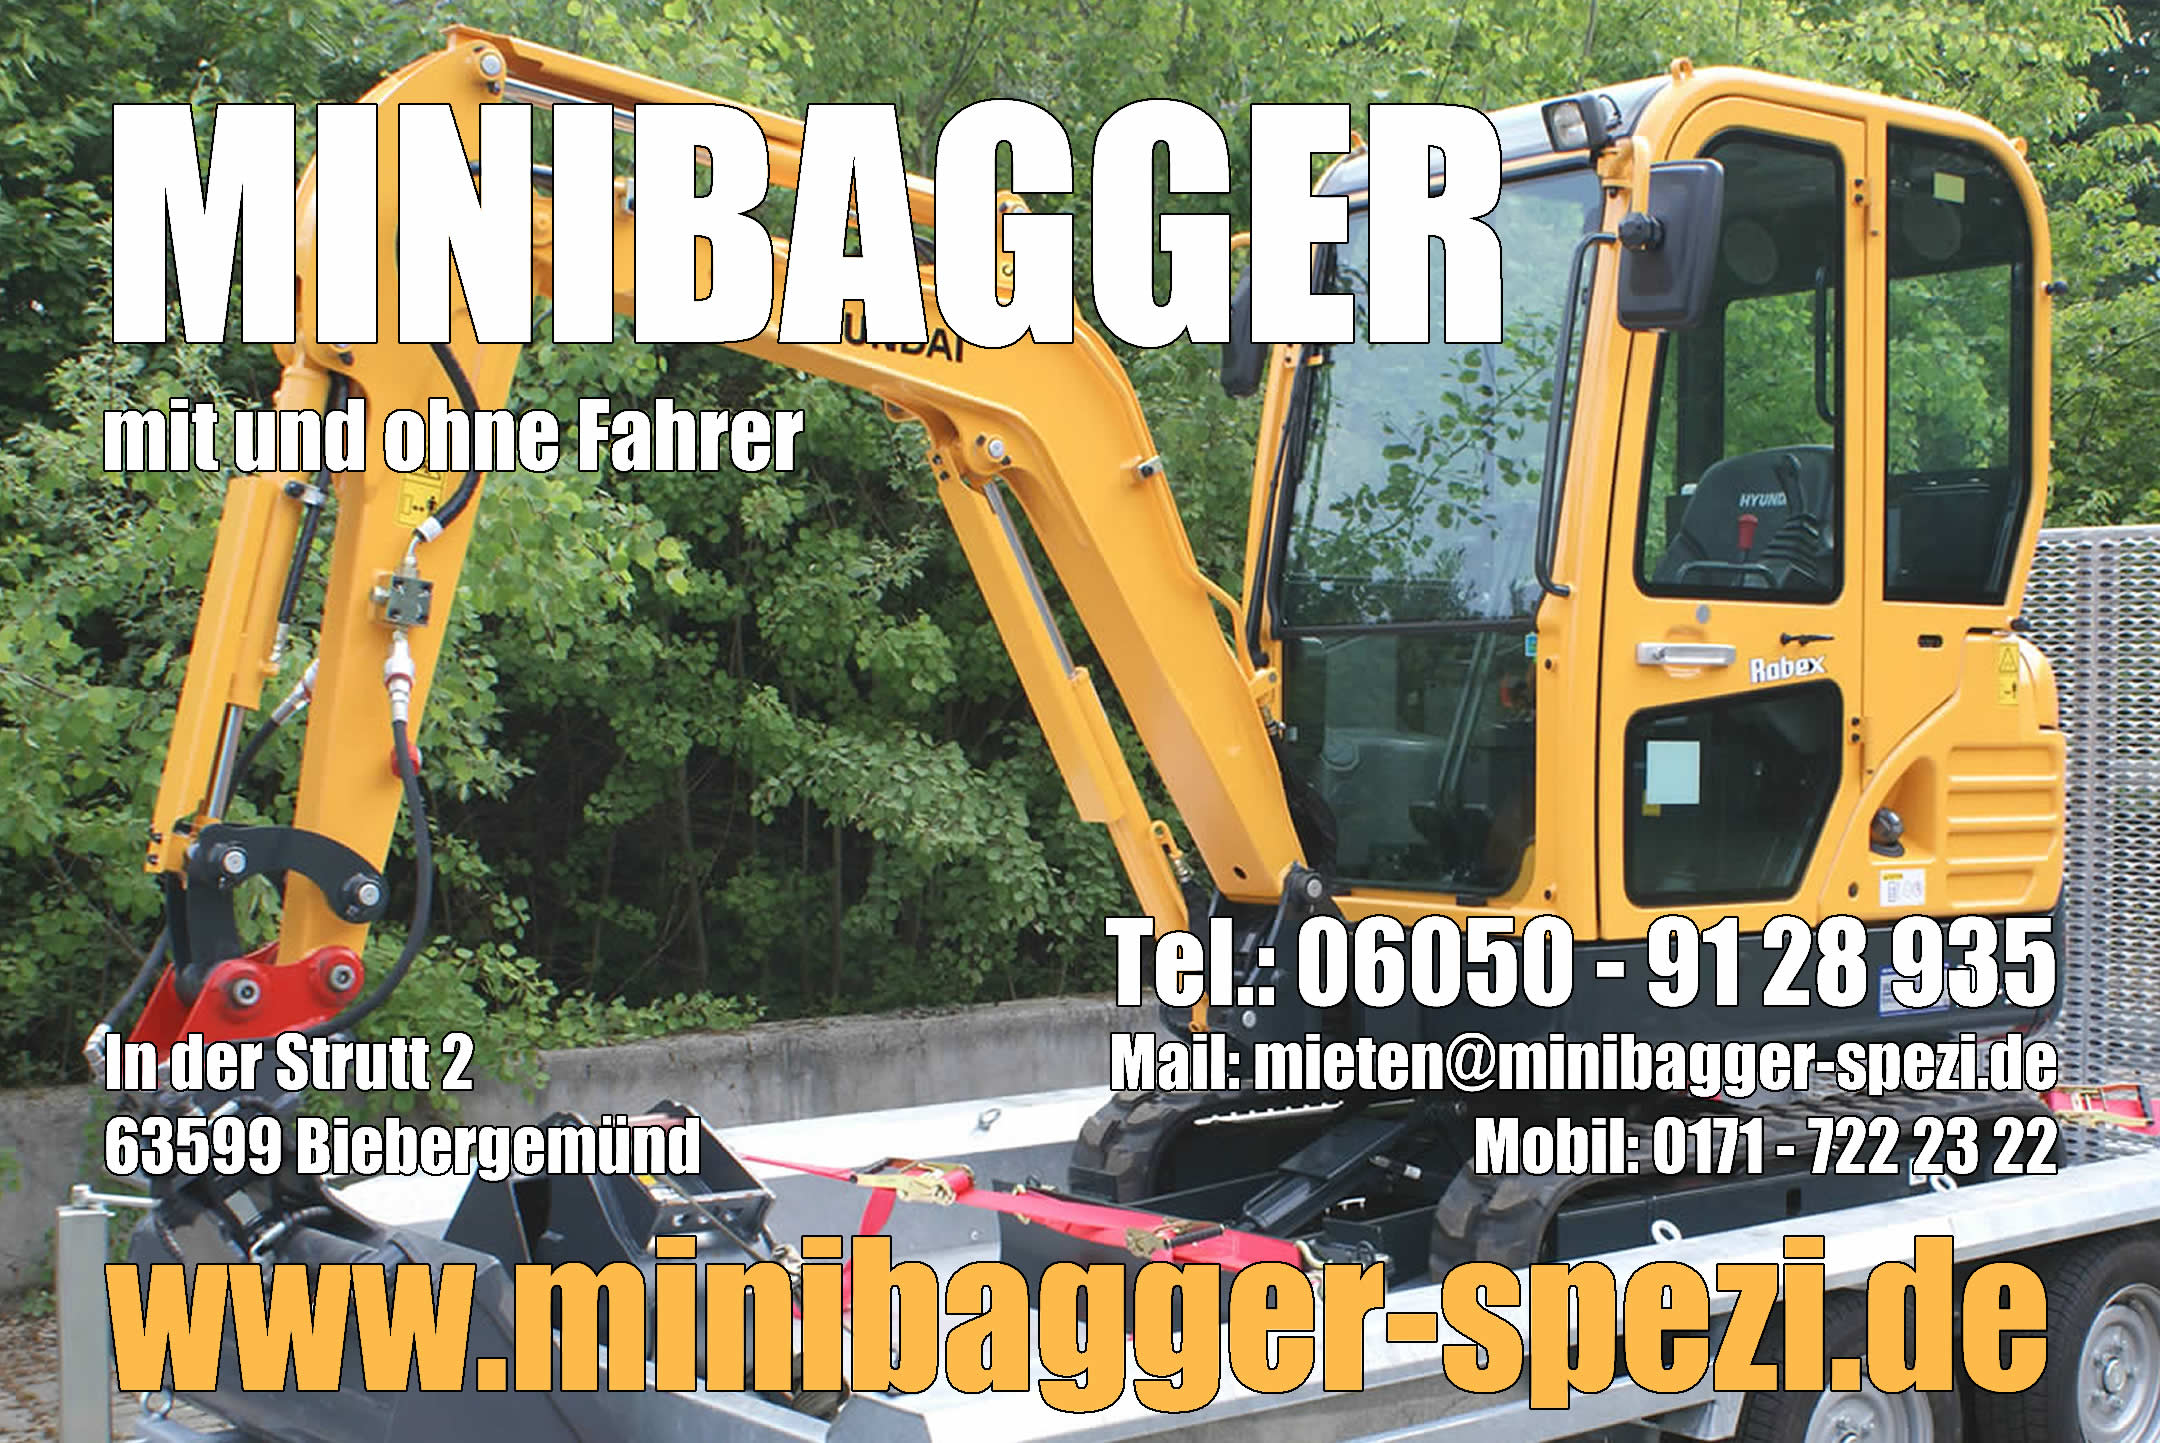 Minibagger-Spezi | Biebergemünd